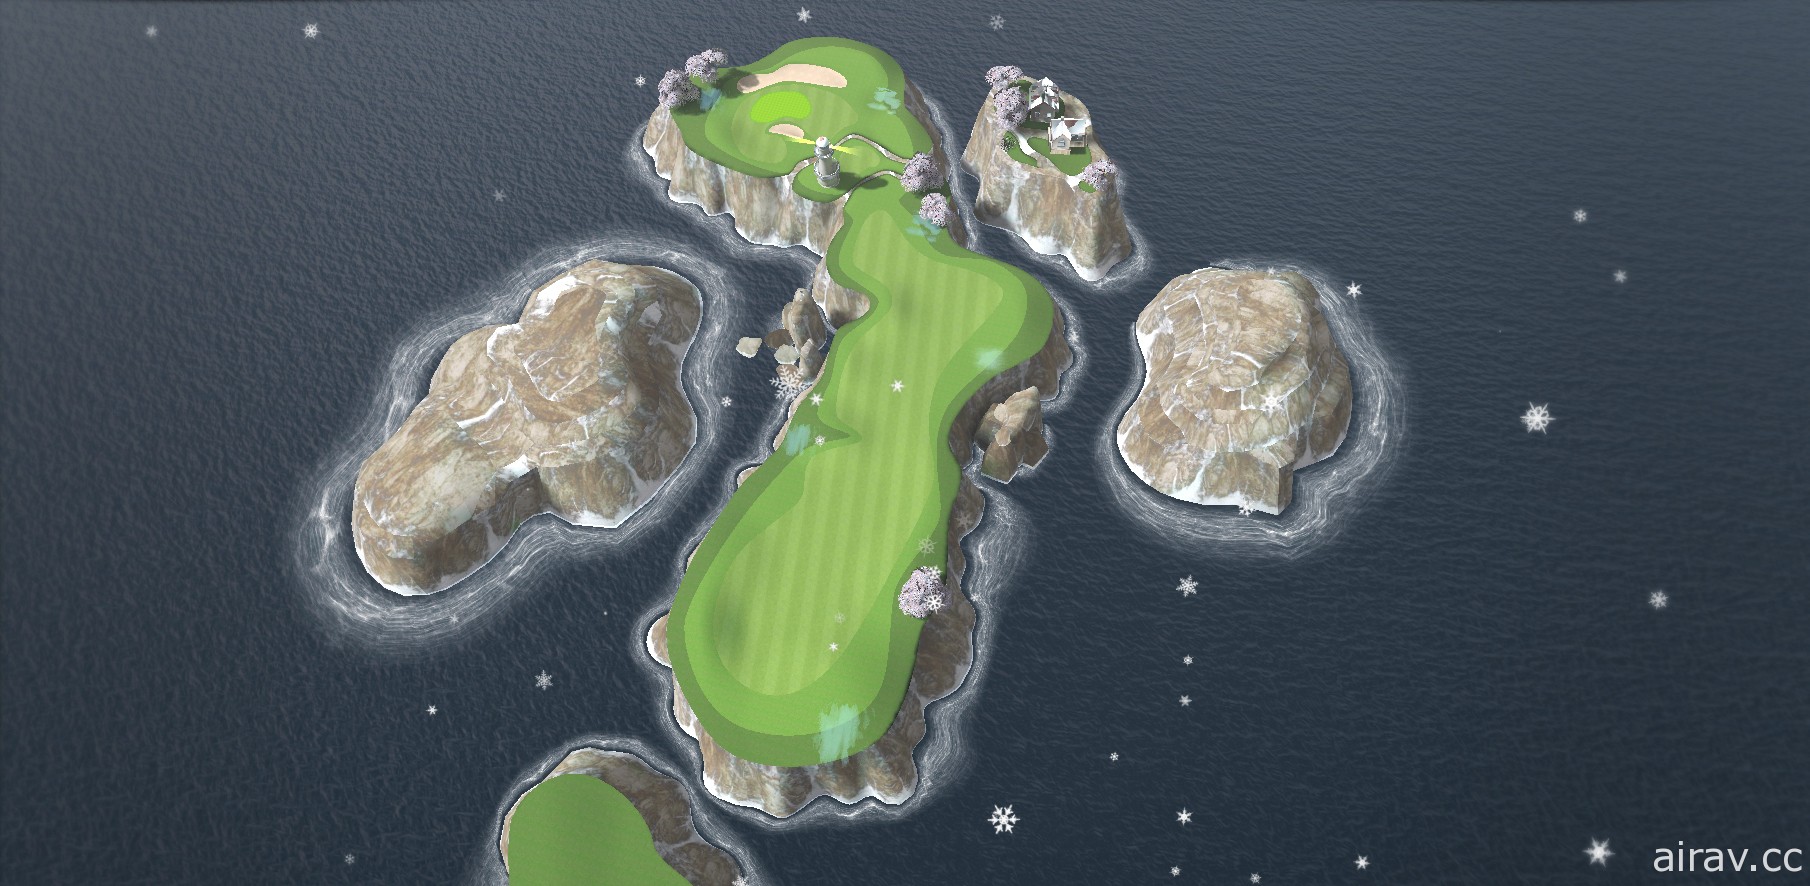 《Extreme Golf》进行 1.6.0 版本更新 追加新巡回赛及高尔夫球